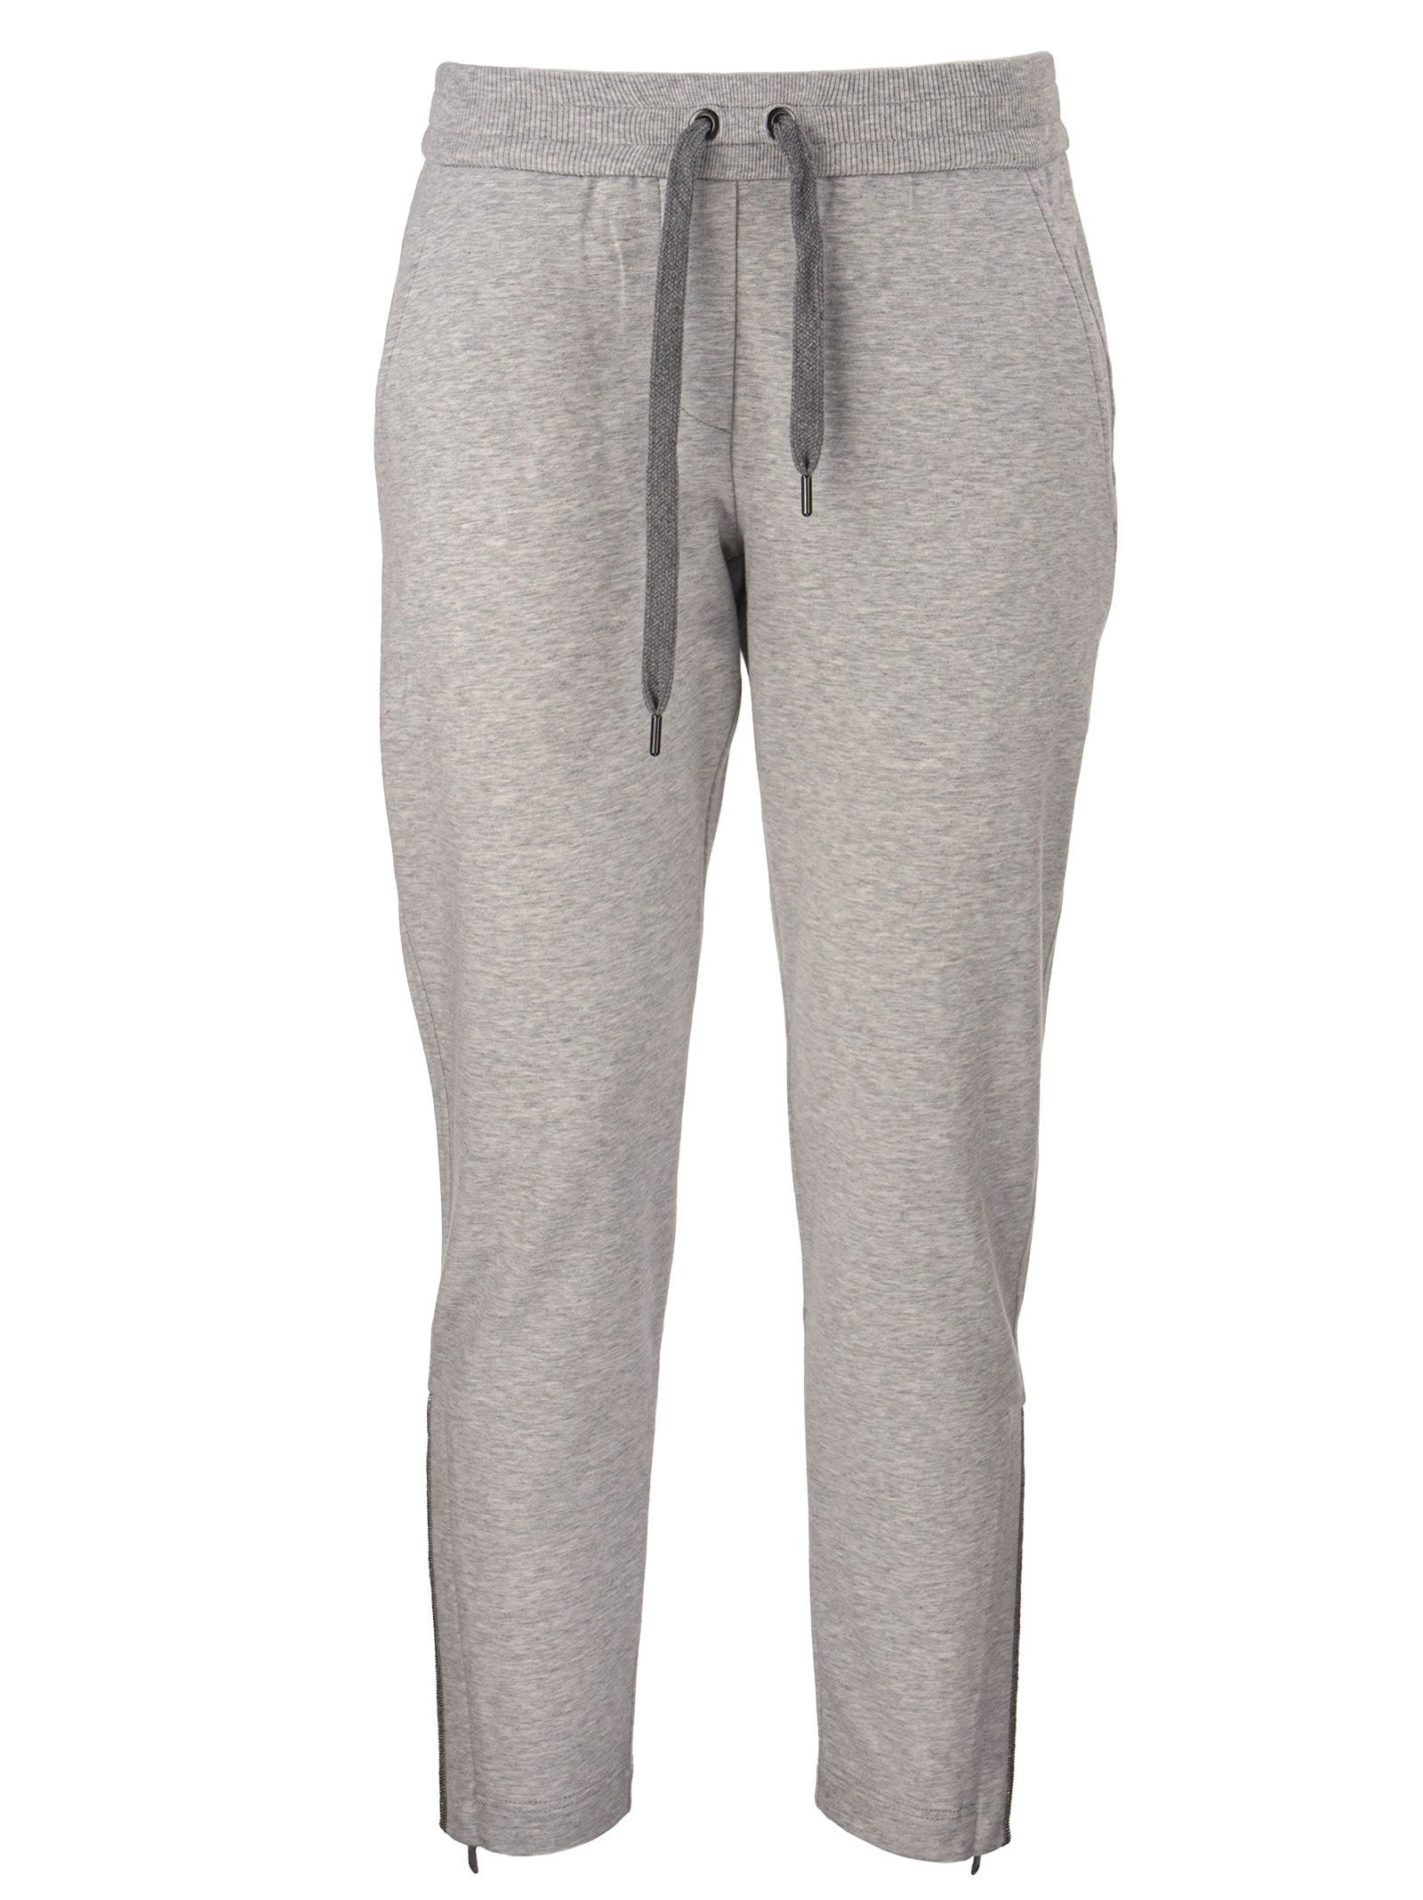 Lightweight stretch cotton sweatpants with shiny zipper cuffs -  Bellettini.com